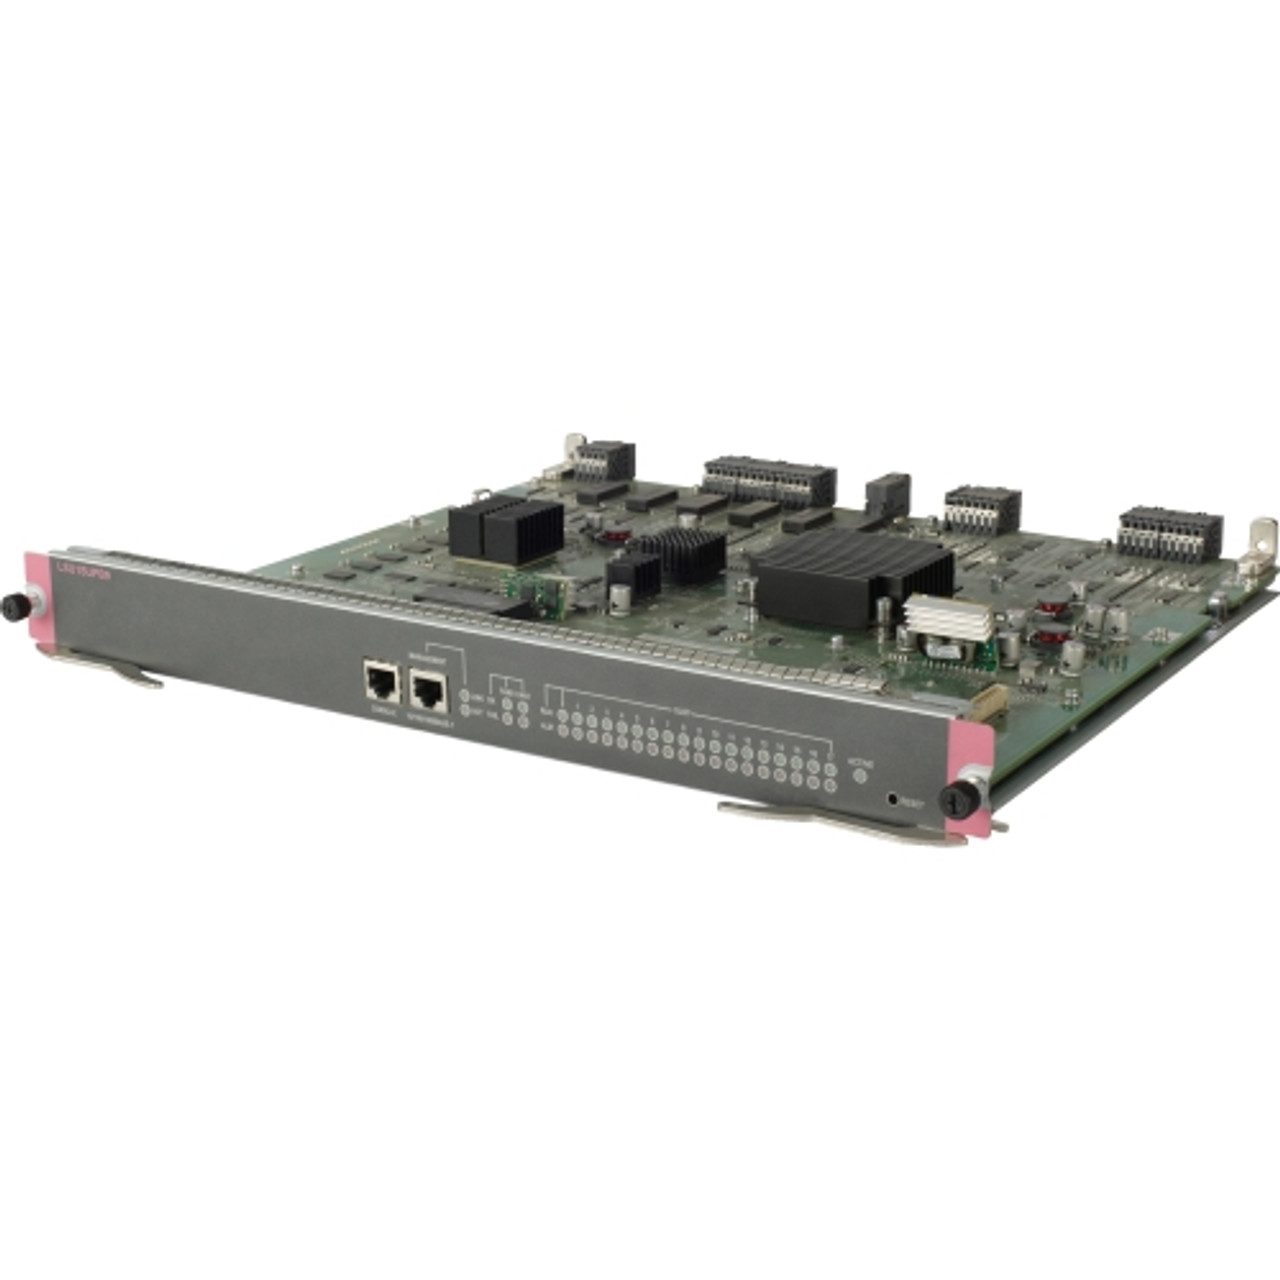 JG609A HP Main Processing Unit for FlexFabric 11900 Switch